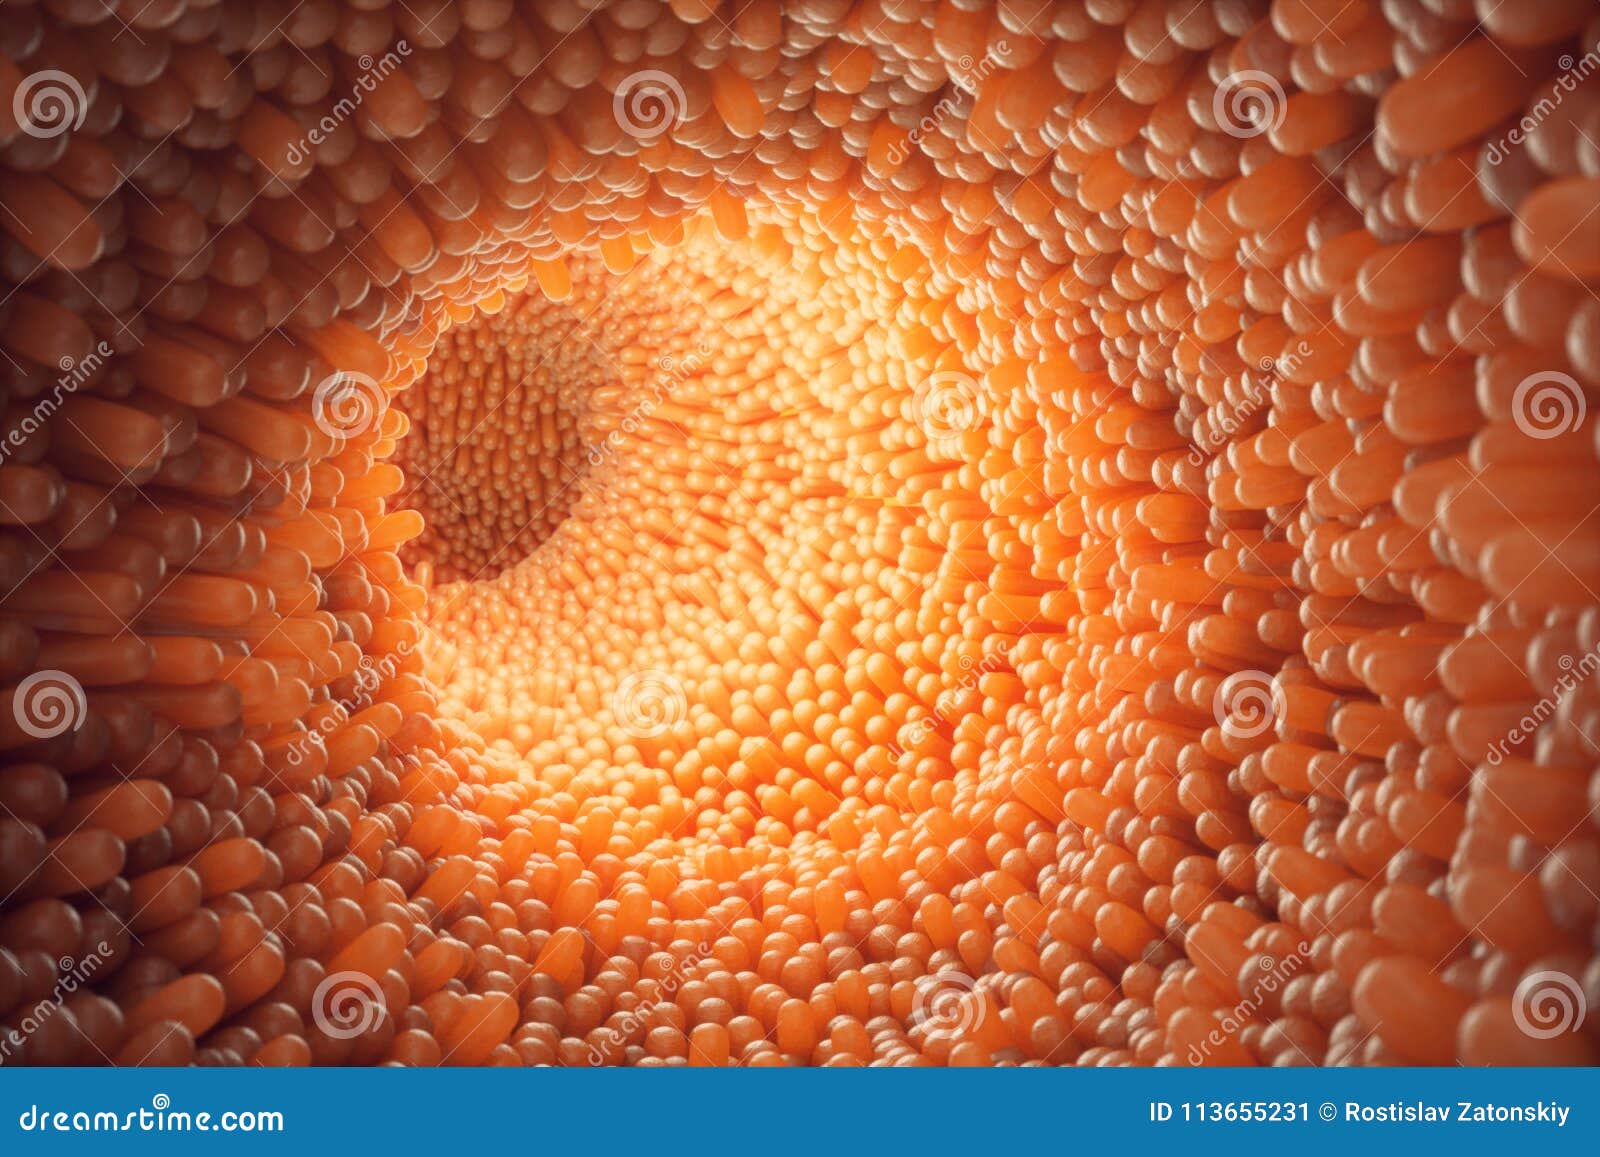 3d  close-up intestinal villi. intestine lining. microscopic villi and capillary. human intestine. concept